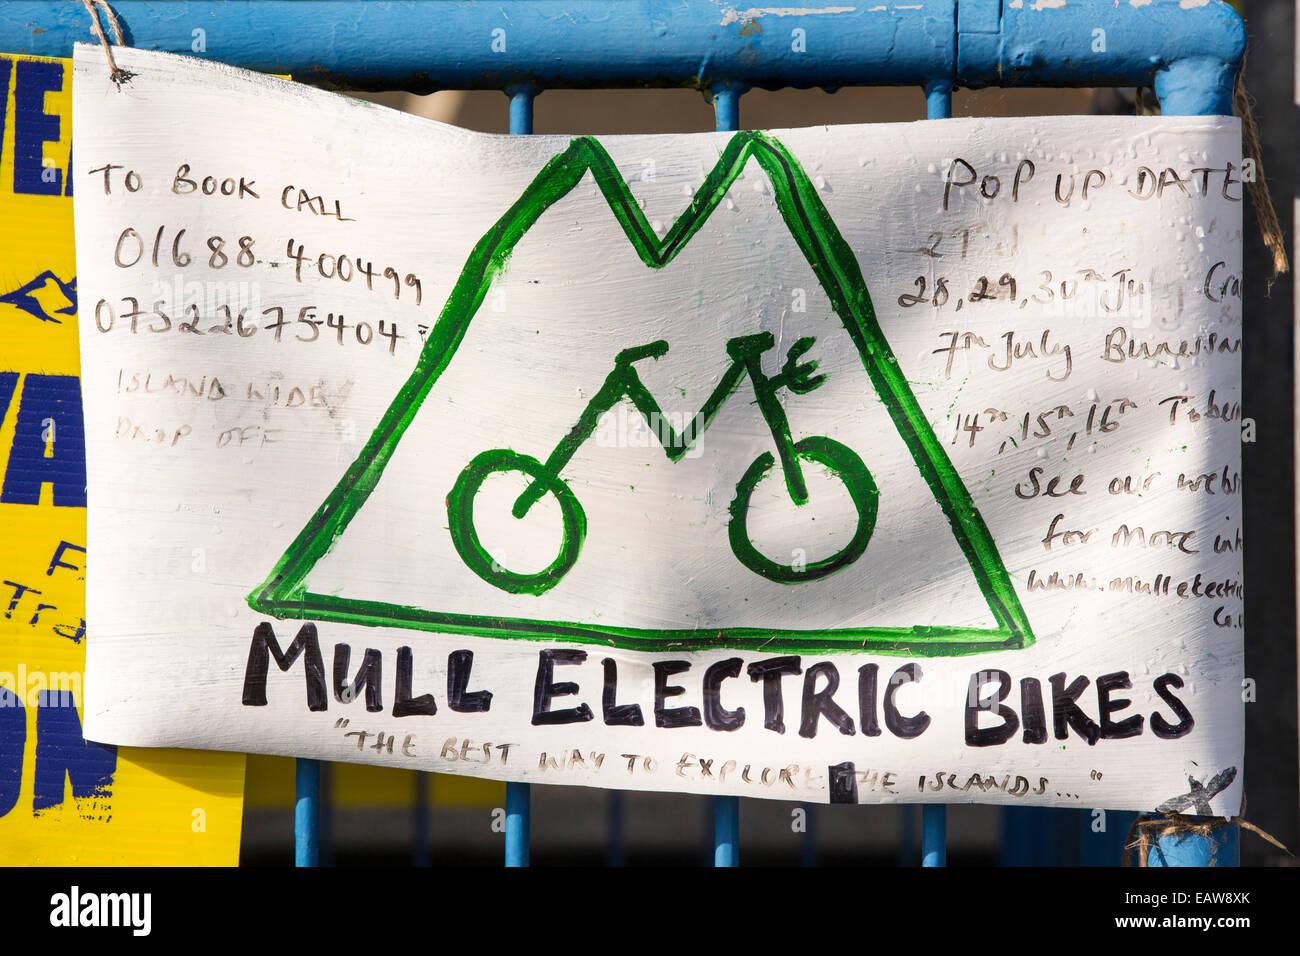 An electric bike hire company on Mull, Scotland, UK. Stock Photo